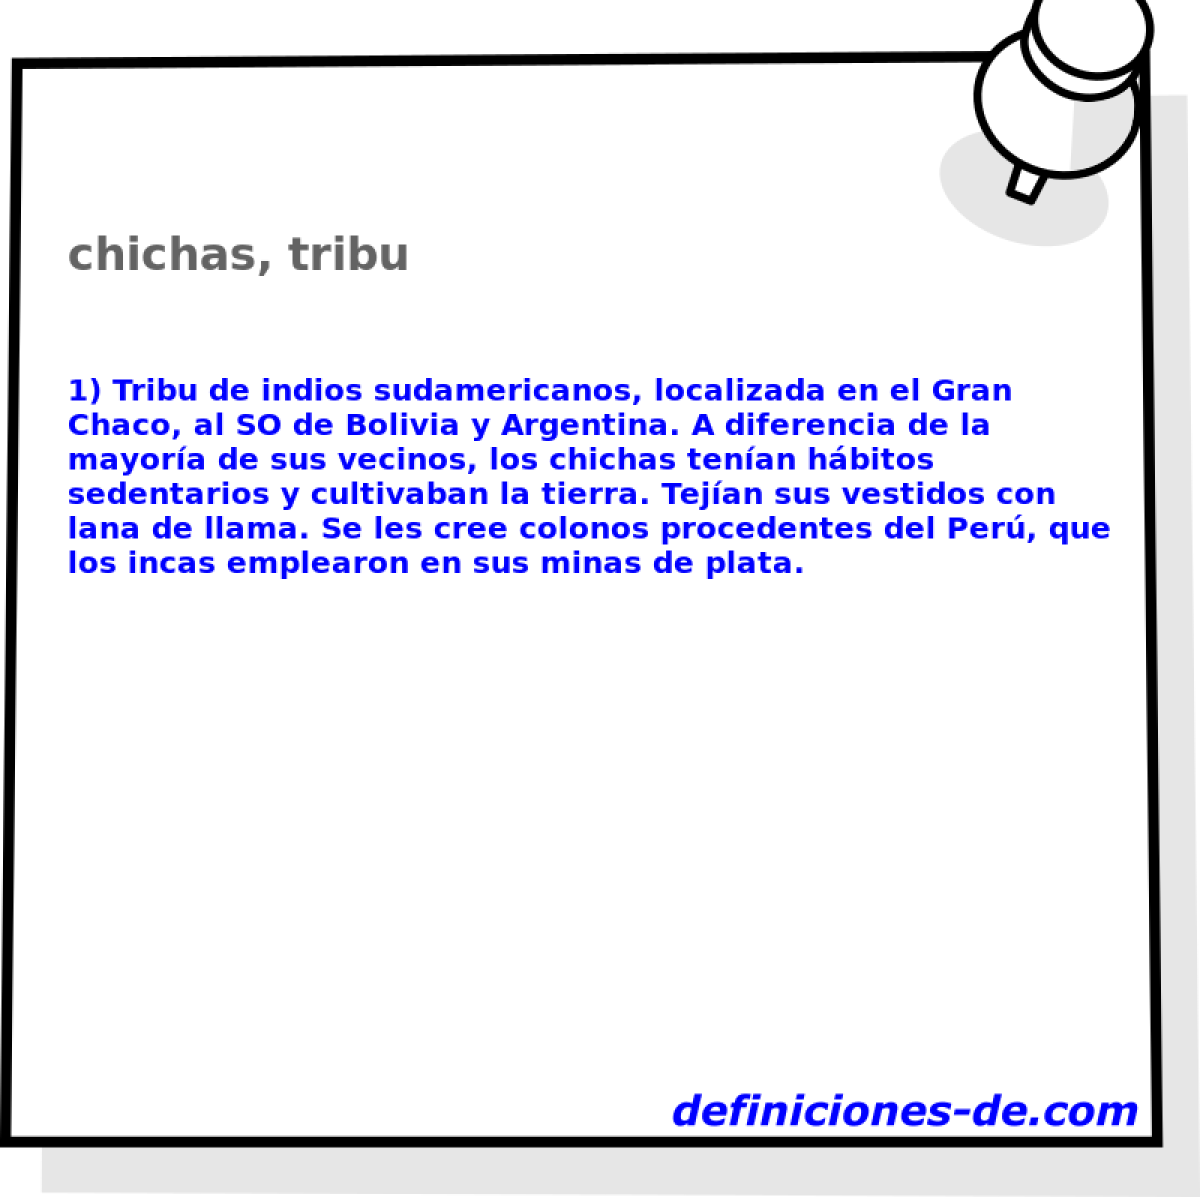 chichas, tribu 